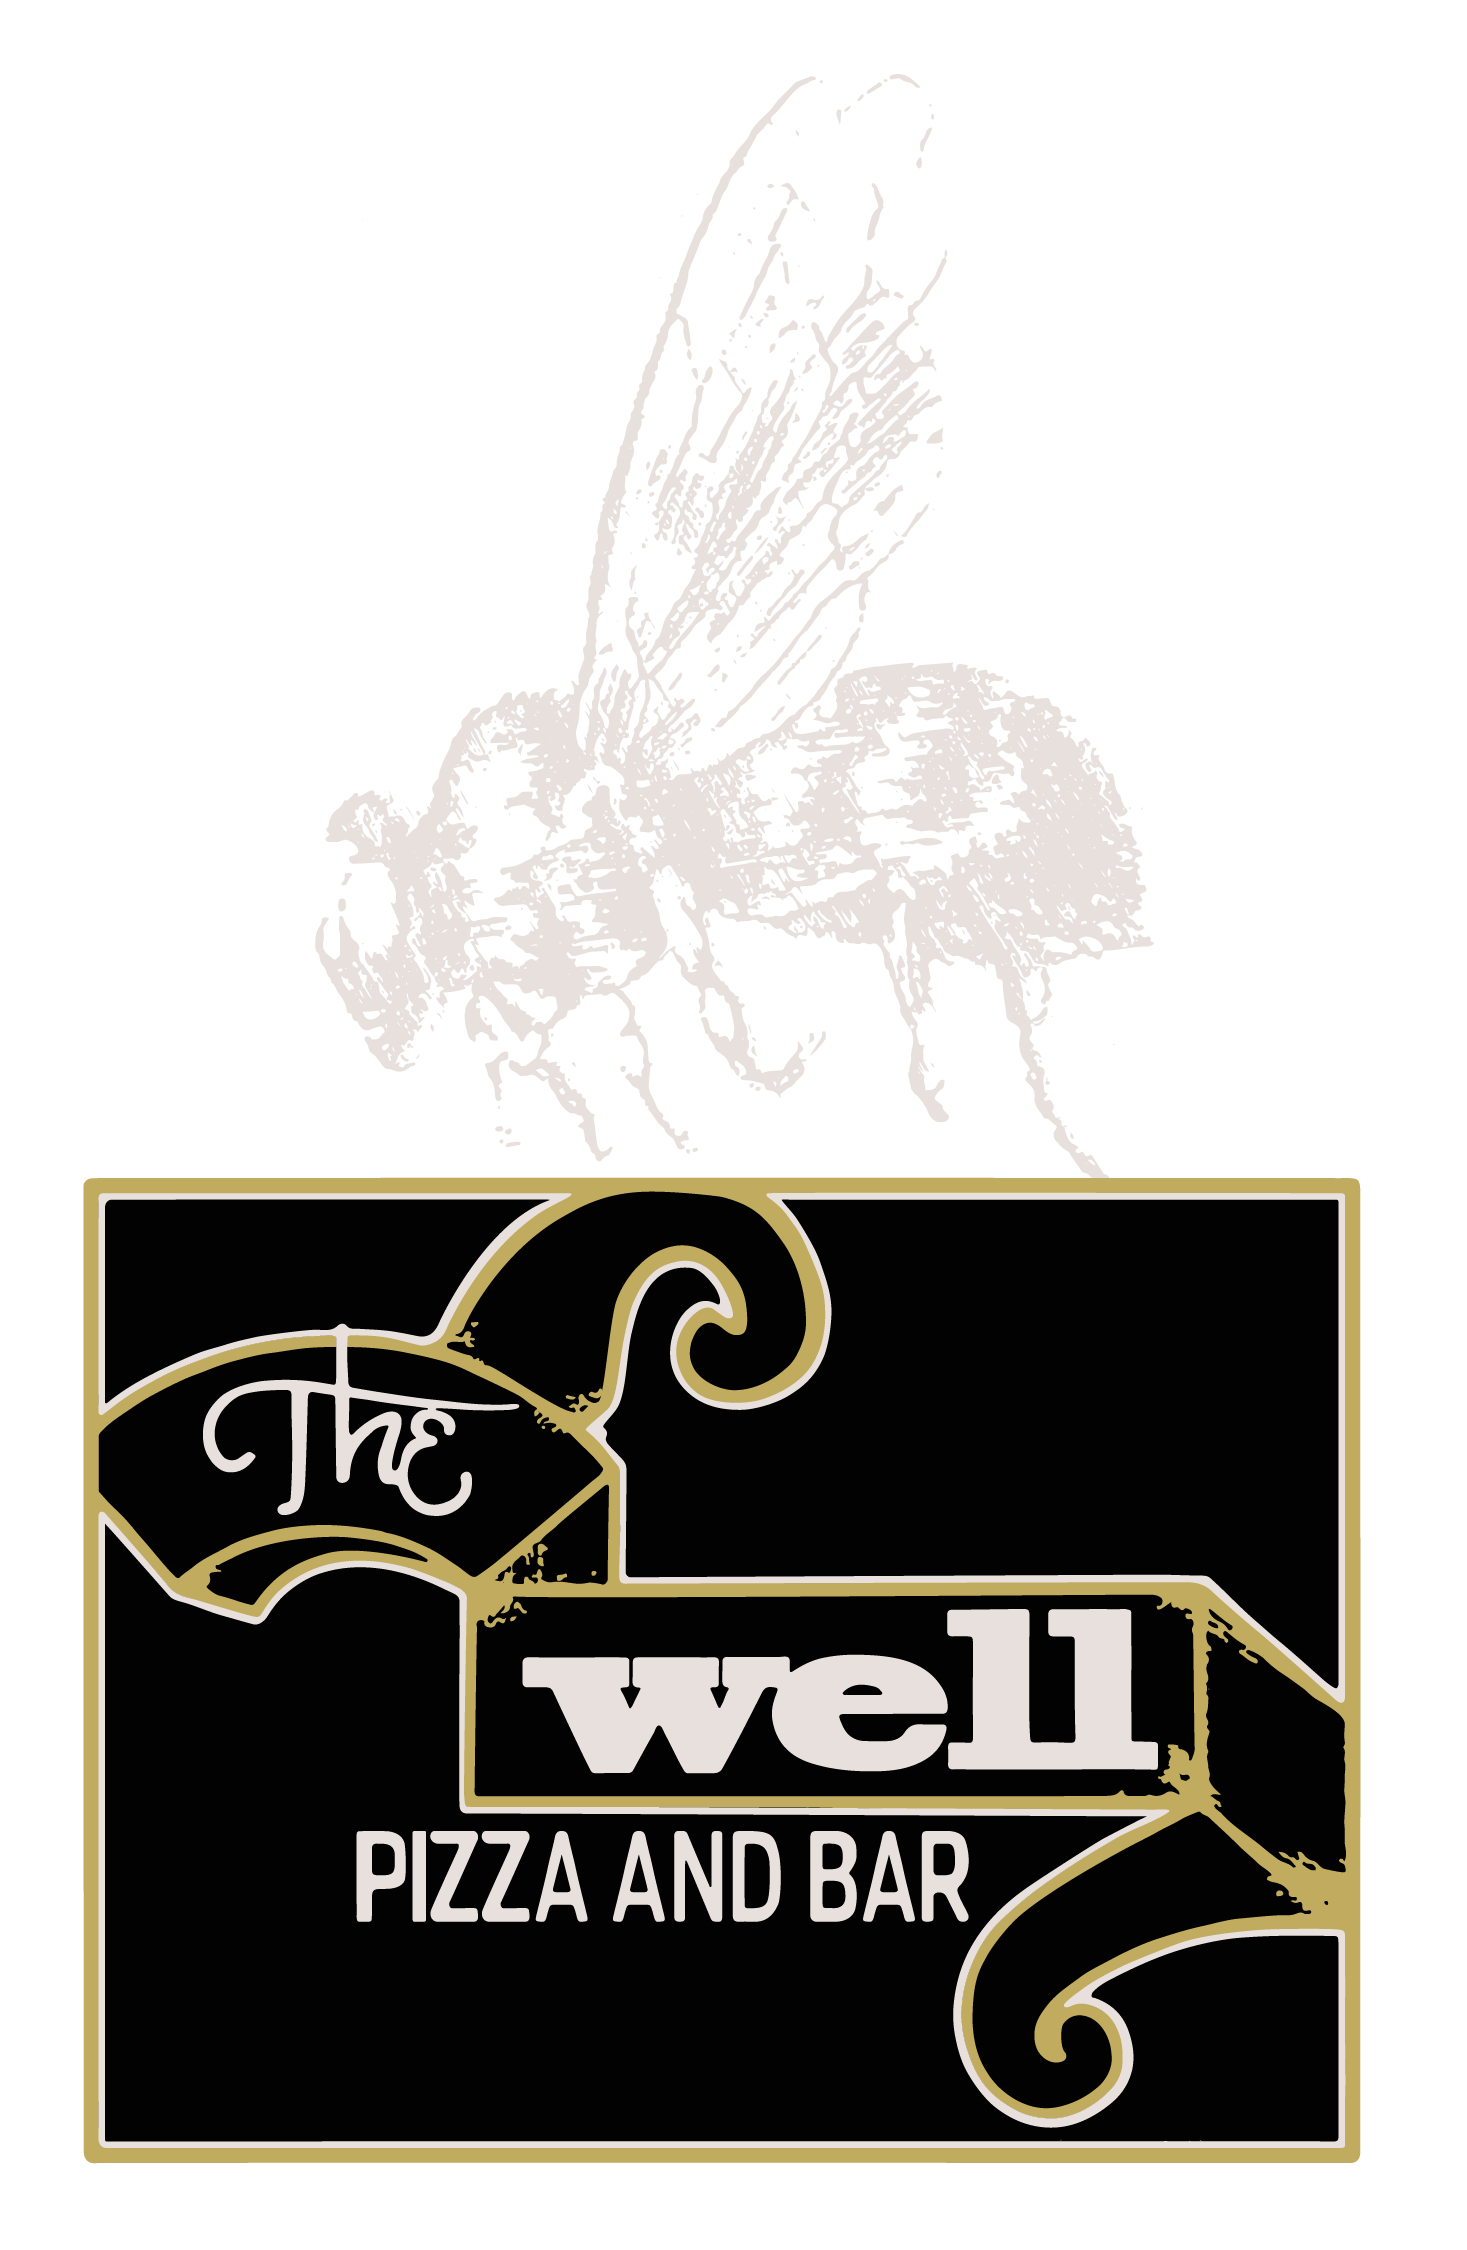 The Well Pizza & Bar logo scroll